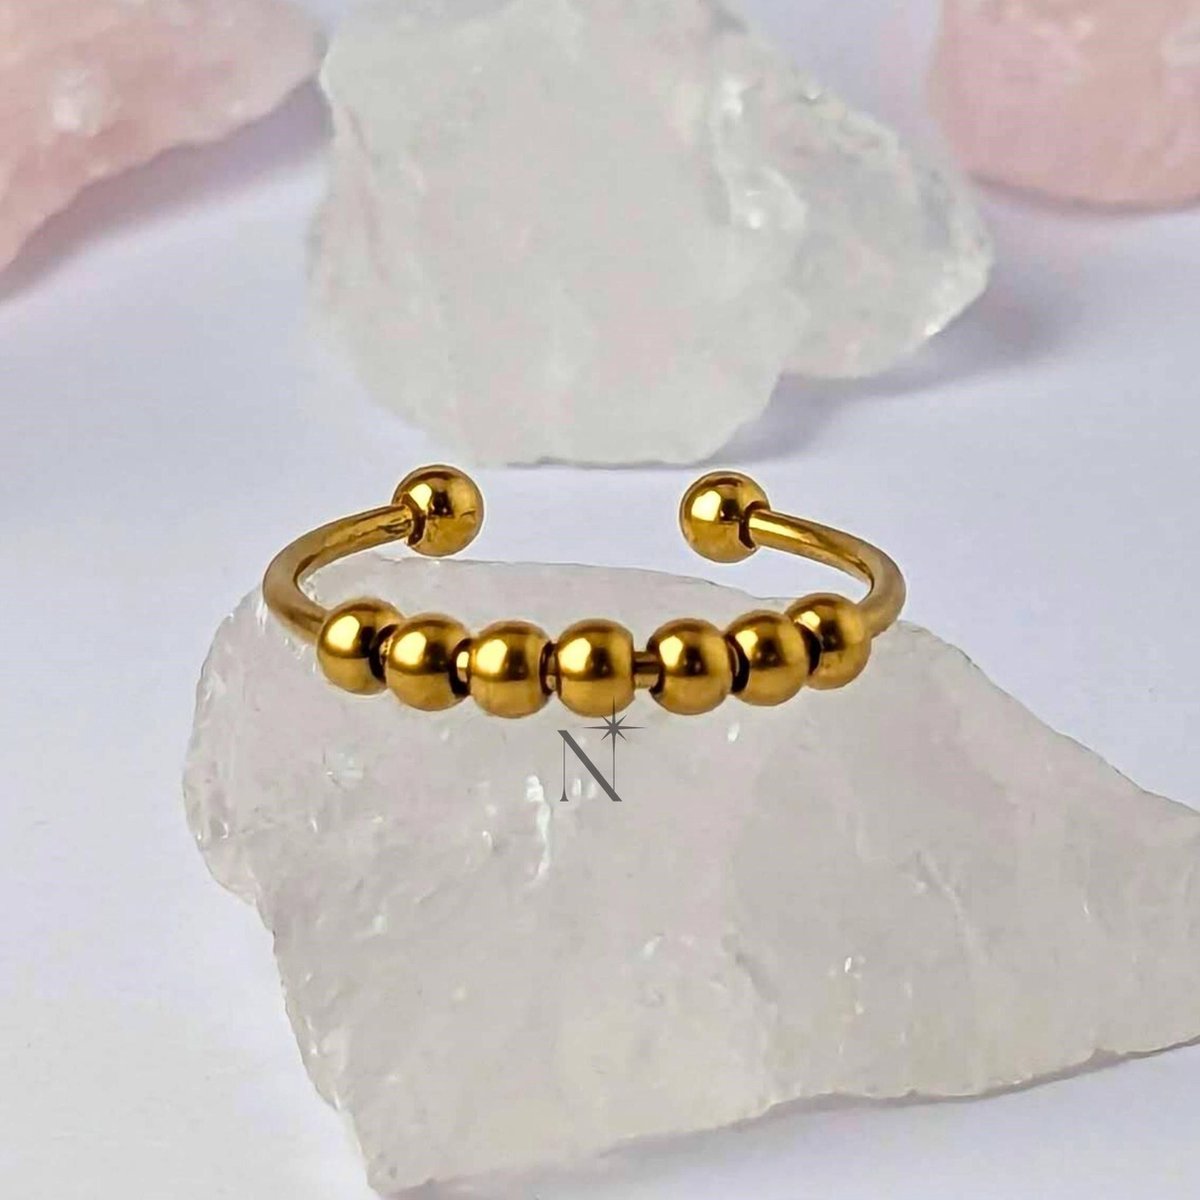 Luminora Bead Ring Goud - Fidget Ring Parels - Anxiety Ring - Stress Ring - Anti Stress Ring - Spinner Ring - Spinning Ring - Draai Ring - Wellness Sieraden